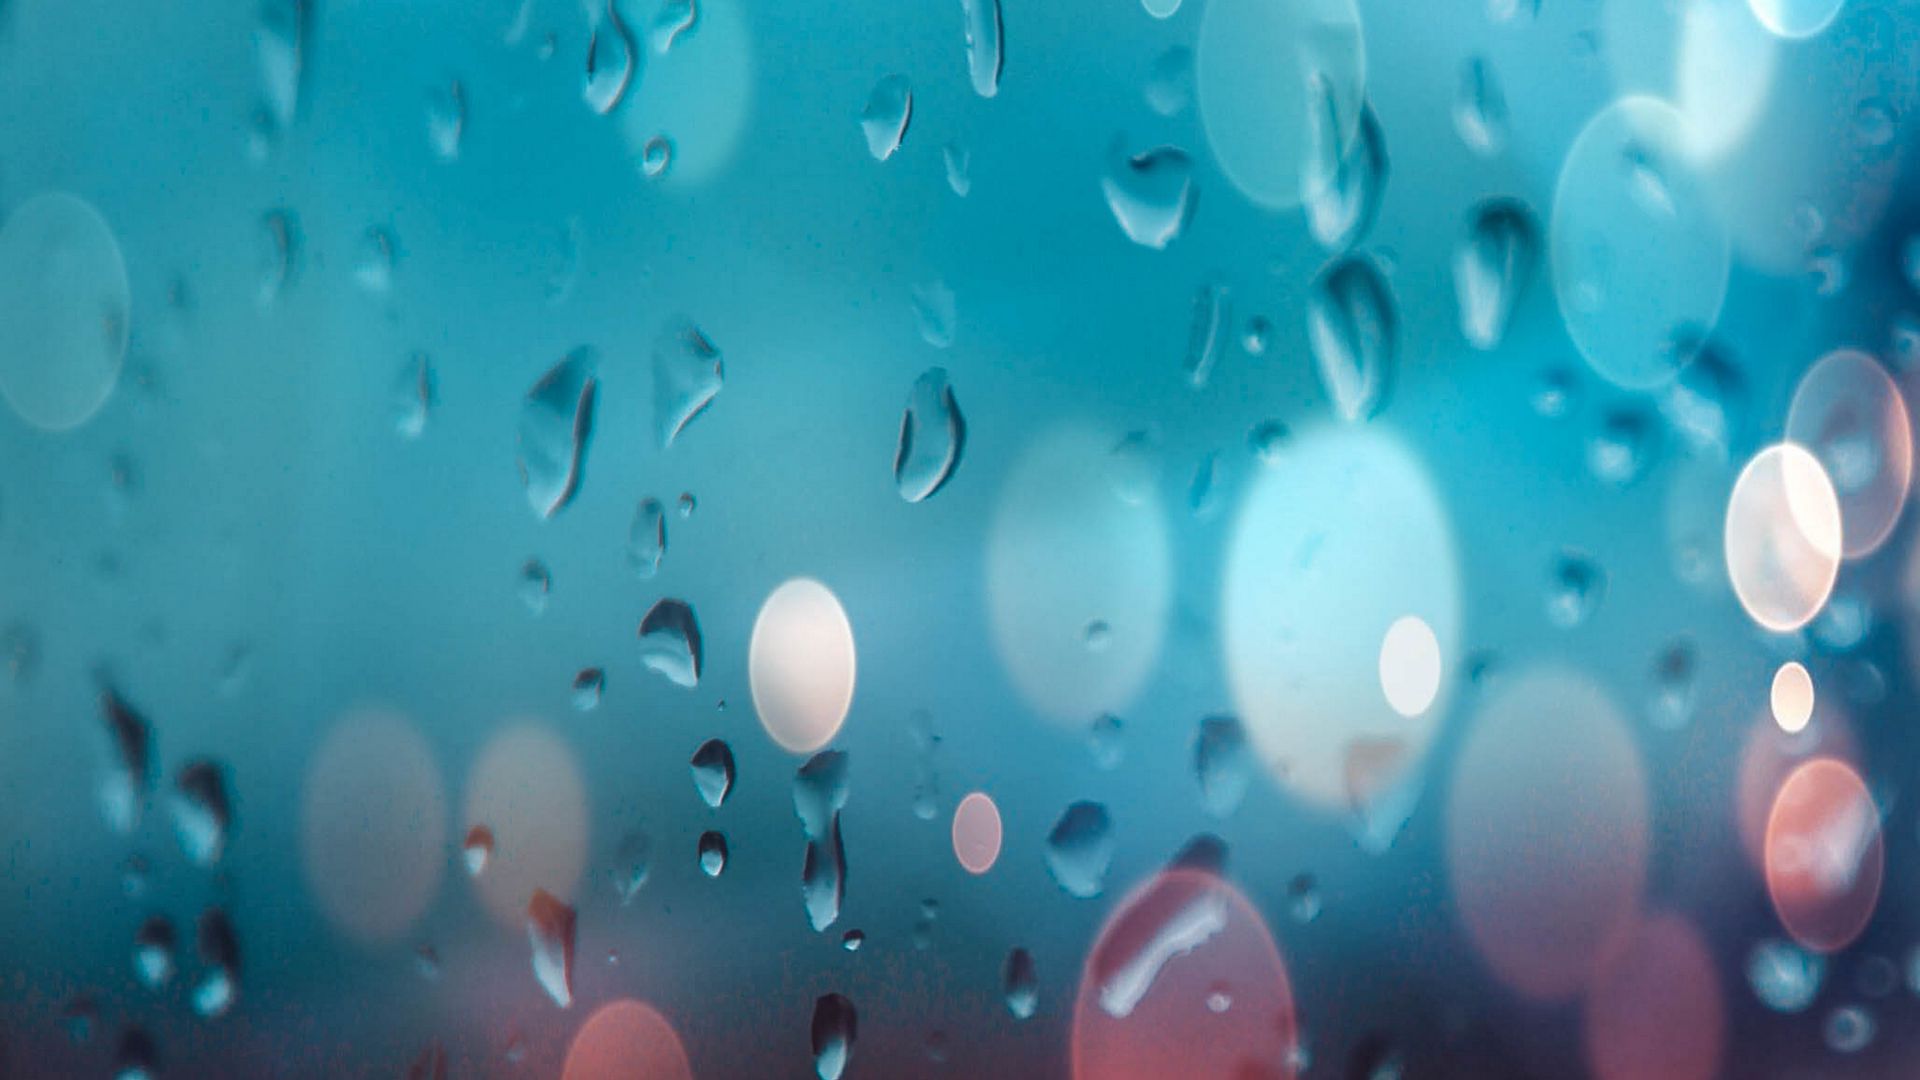 Download Wallpaper 1920x1080 Drops Glare Bokeh Rain Glass Blur